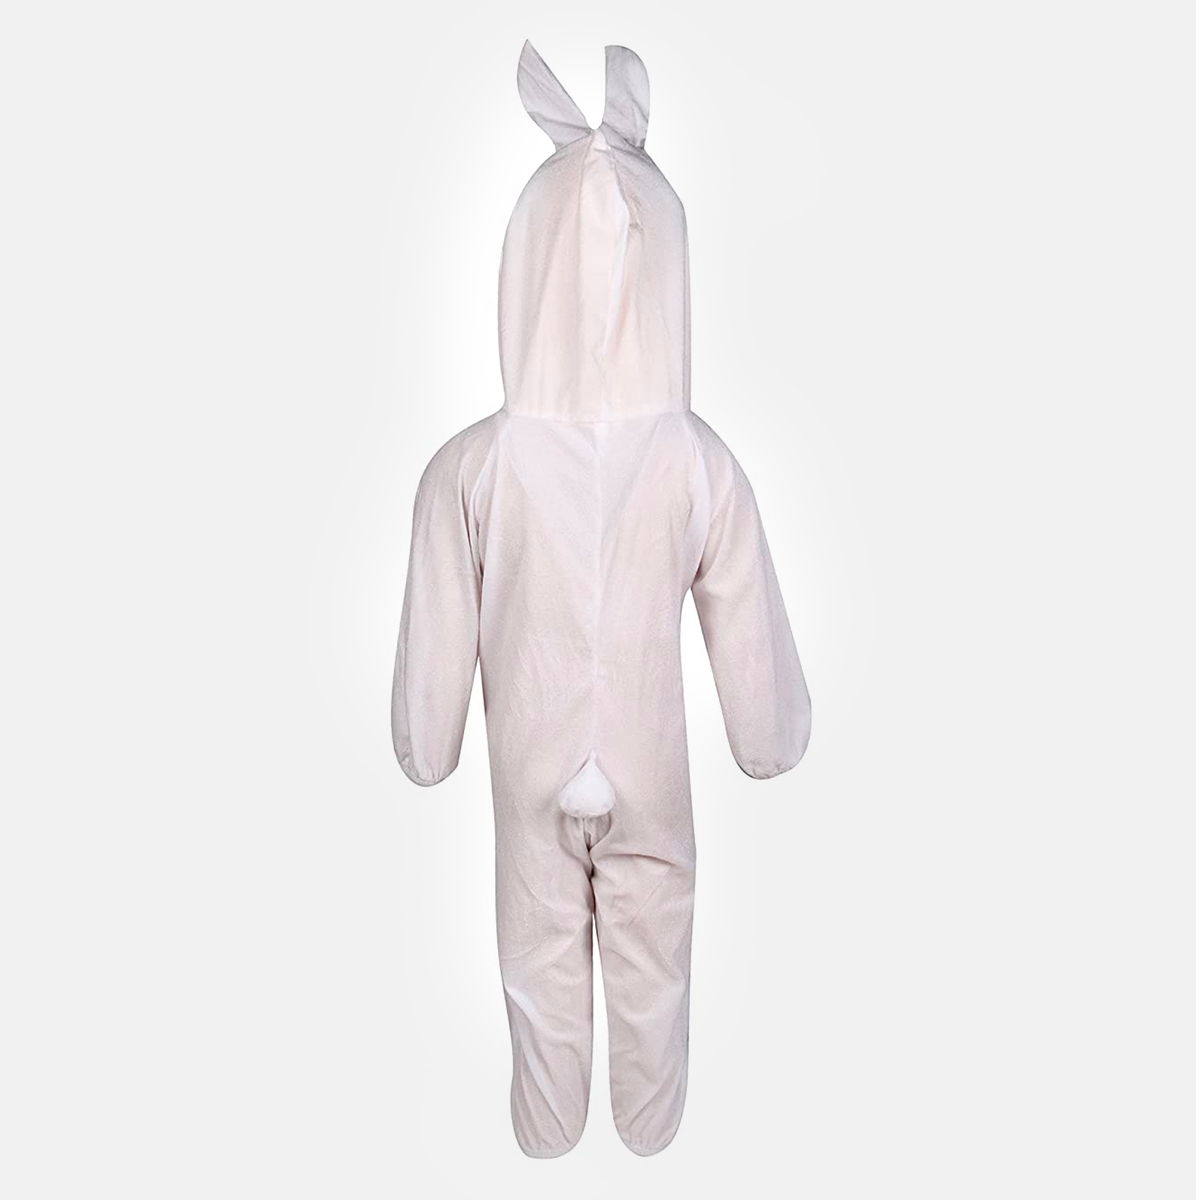 ITSMYCOSTUME Rabbit Costume Dress For Kids Animal Fancy Dress Costume